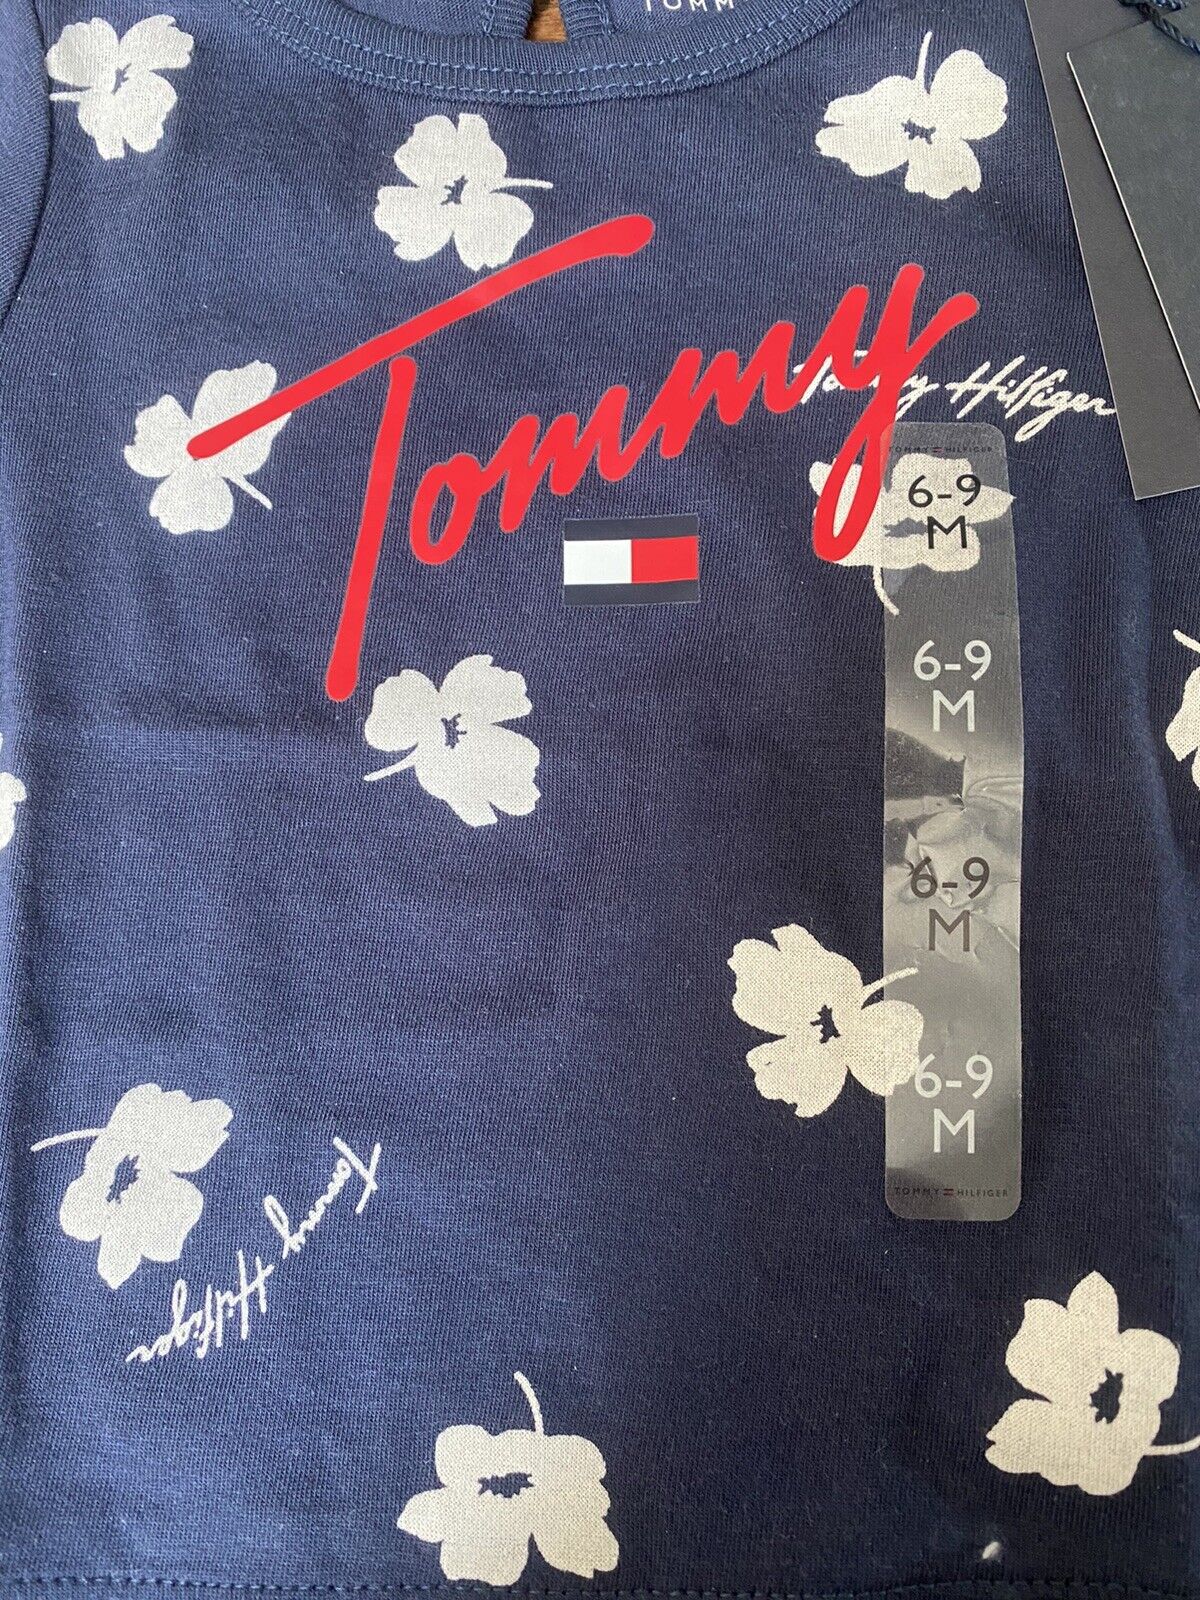 TOMMY HILFIGER Shirt T-Shirt Geschenk Gr. 68-74 (6-9 Monate) NEU mit Etikett